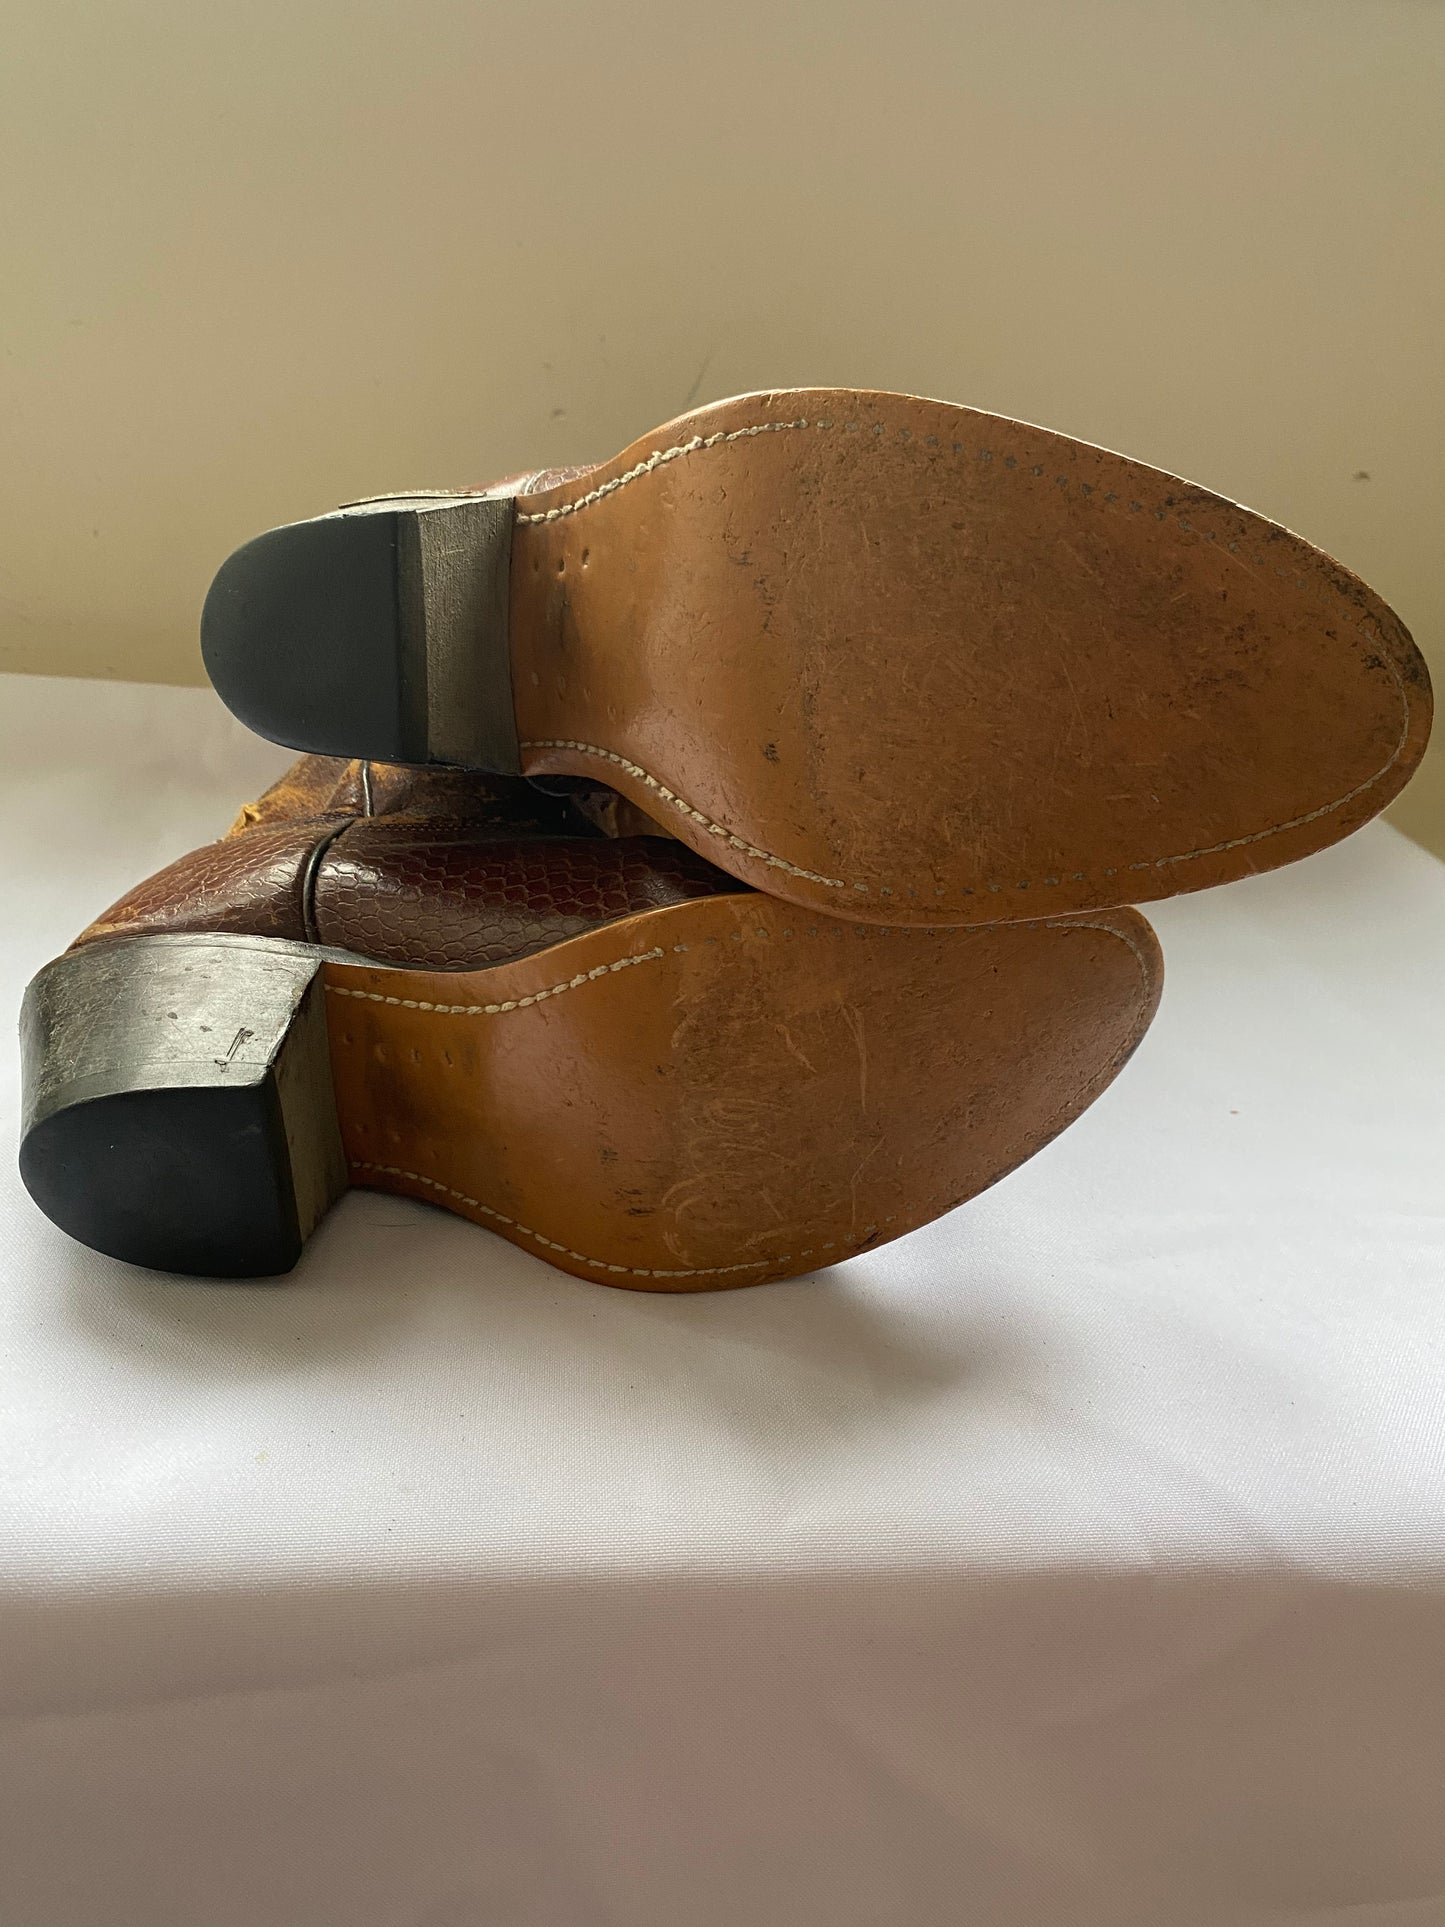 Brown Laredo Cowboy Boots